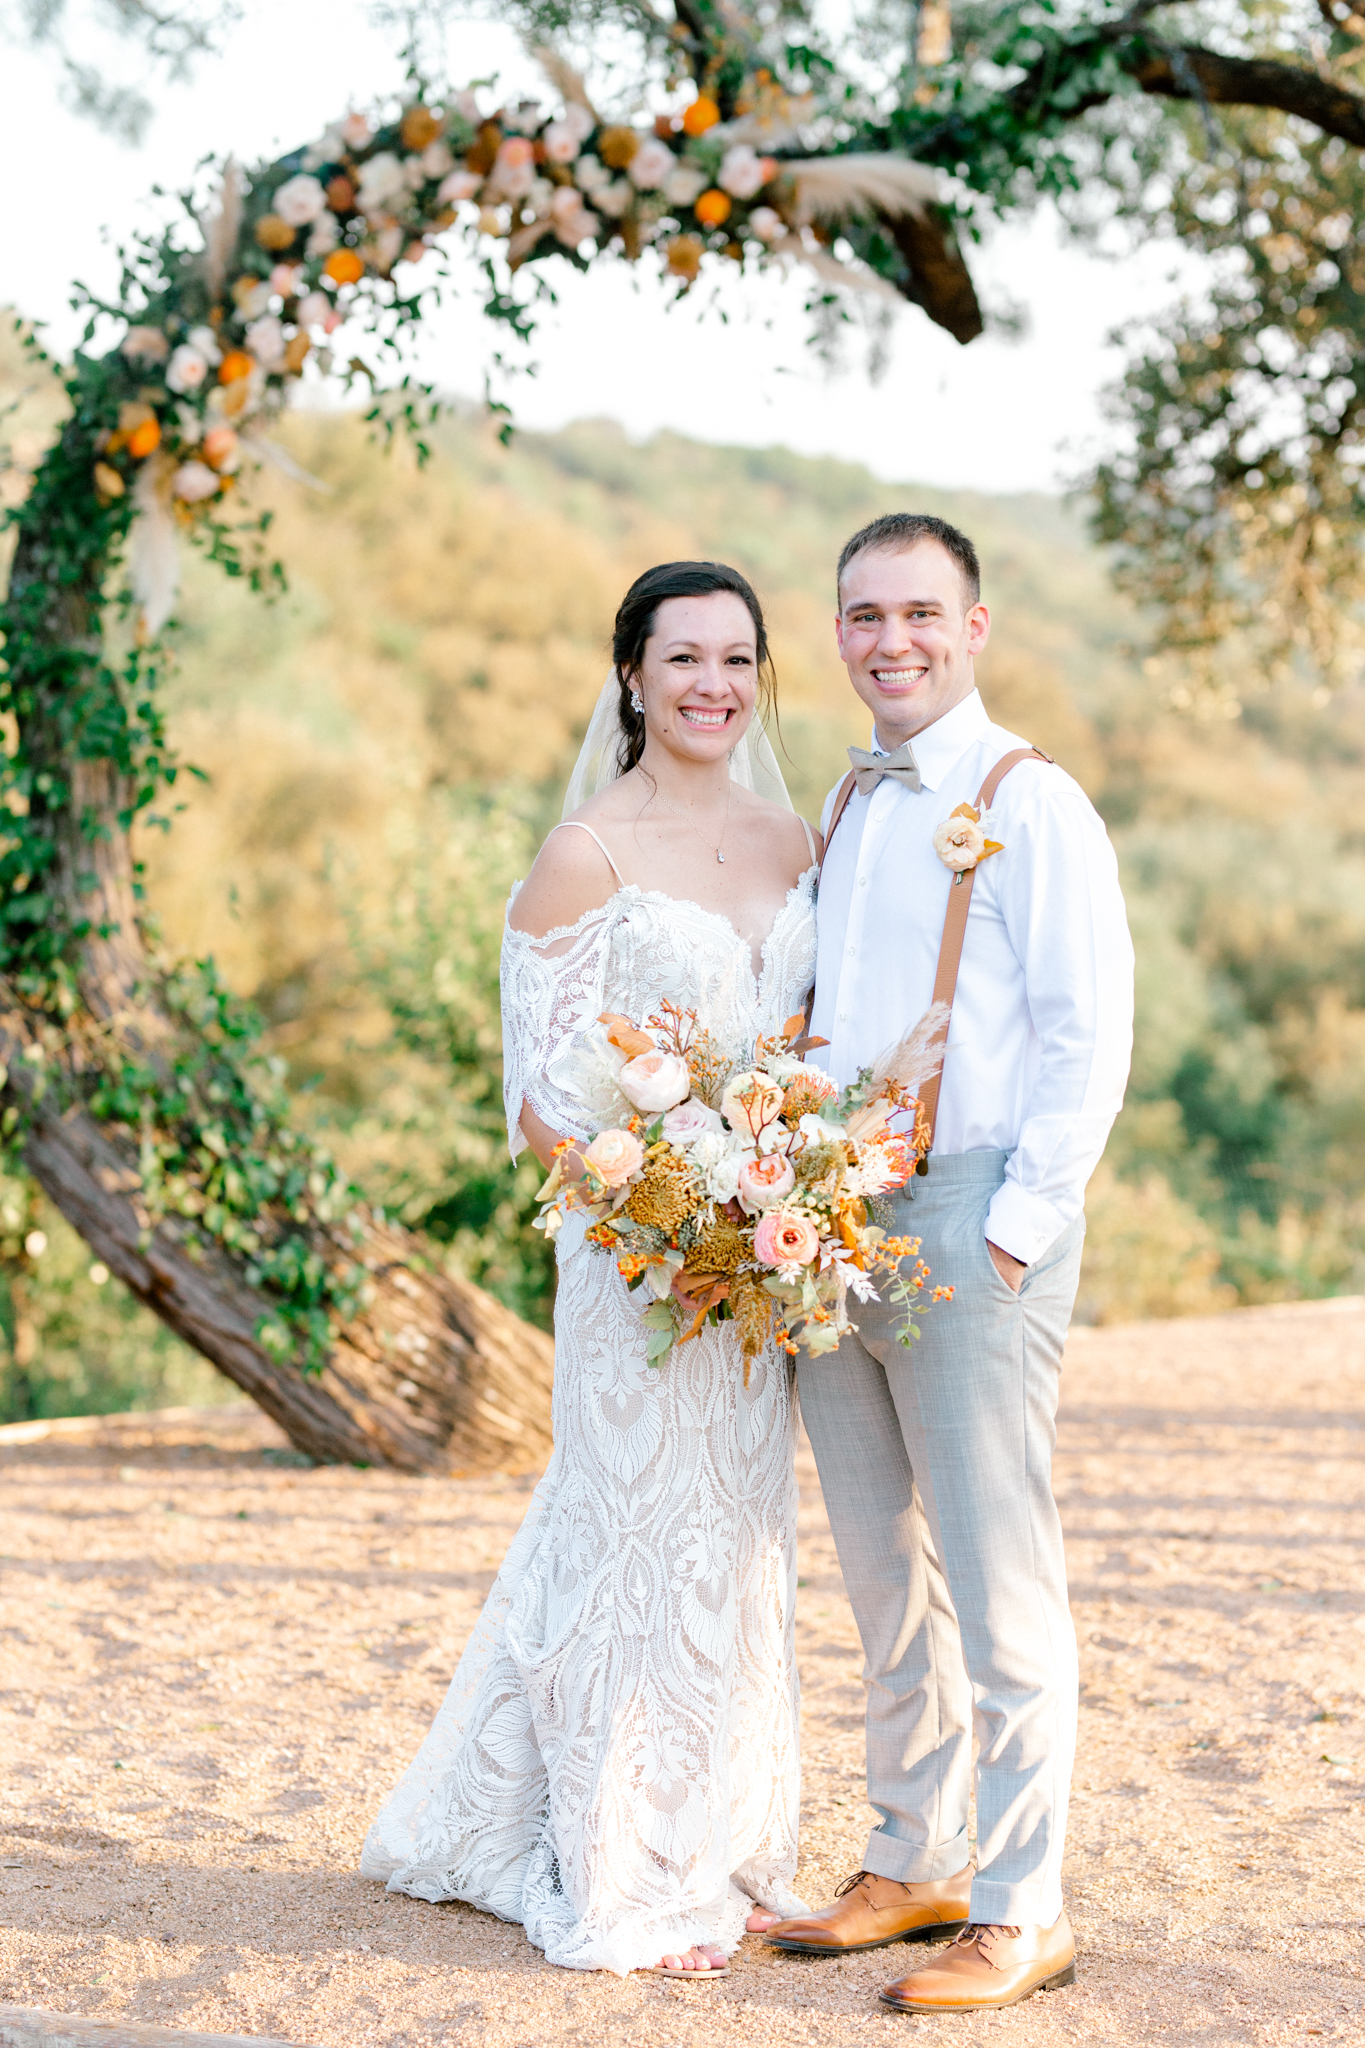 Elise & John's Wedding at Rest Yourself River Ranch | Dallas Wedding Photographer | Sami Kathryn Photography